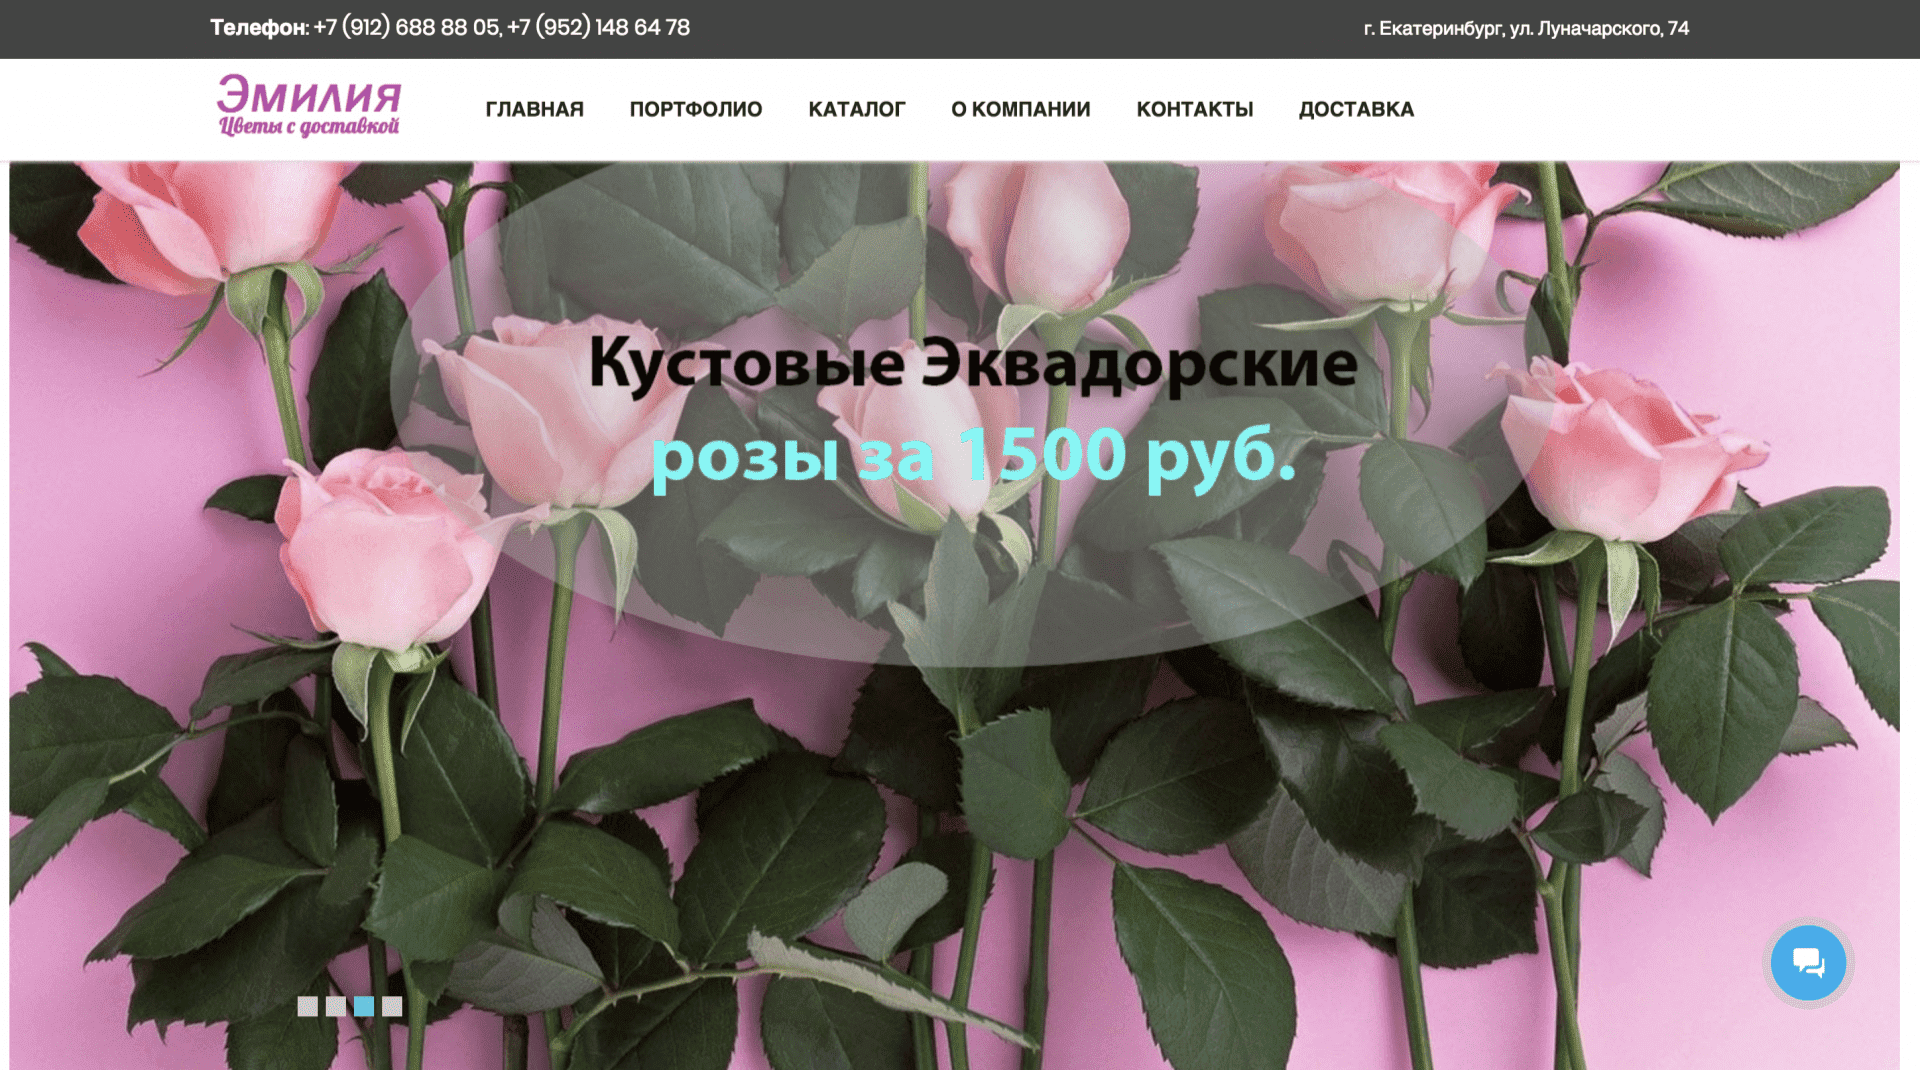 Интернет-магазин цветов Эмилия